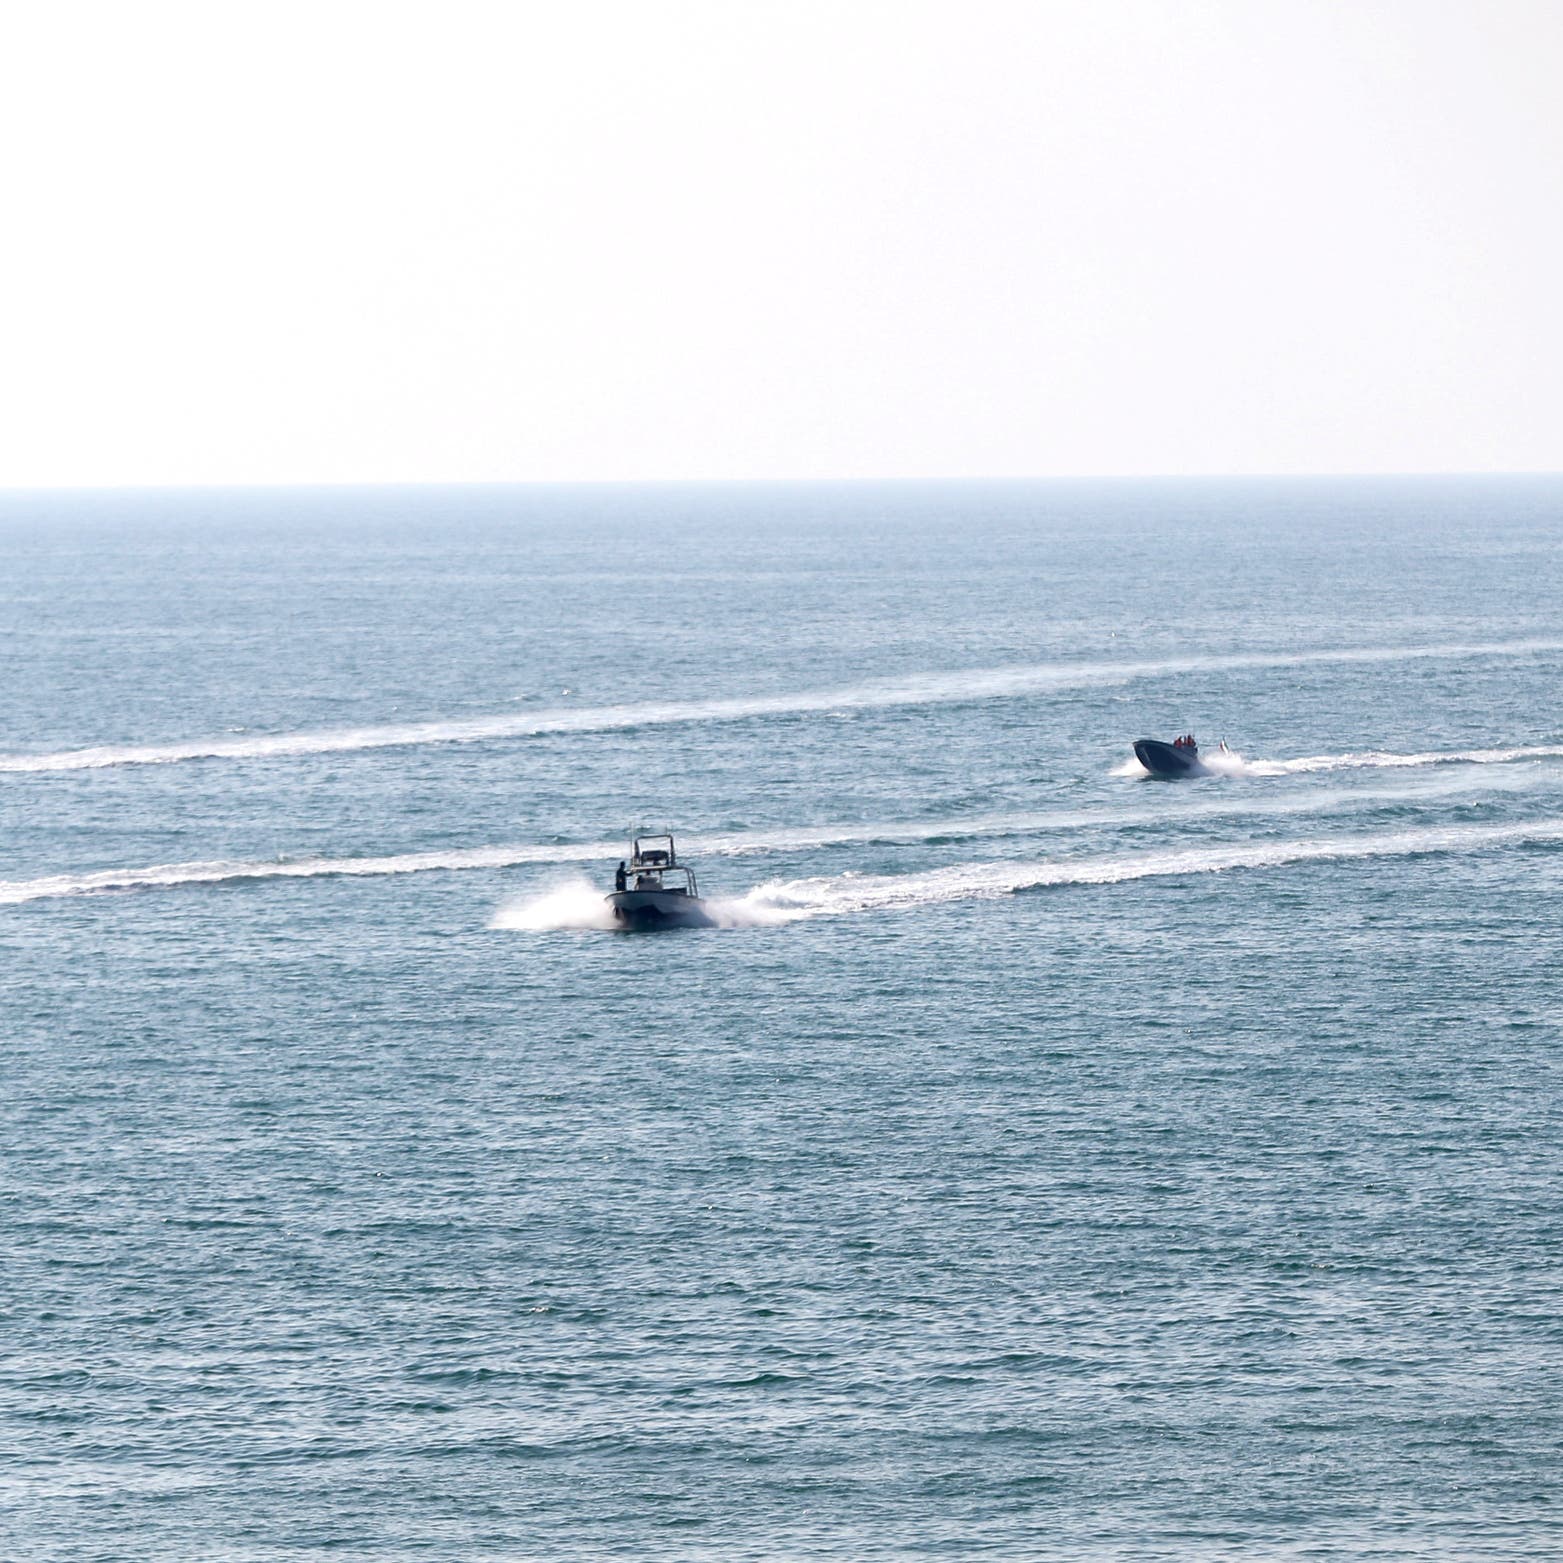 Iran state TV says IRGC speedboats intercepted US Navy vessel